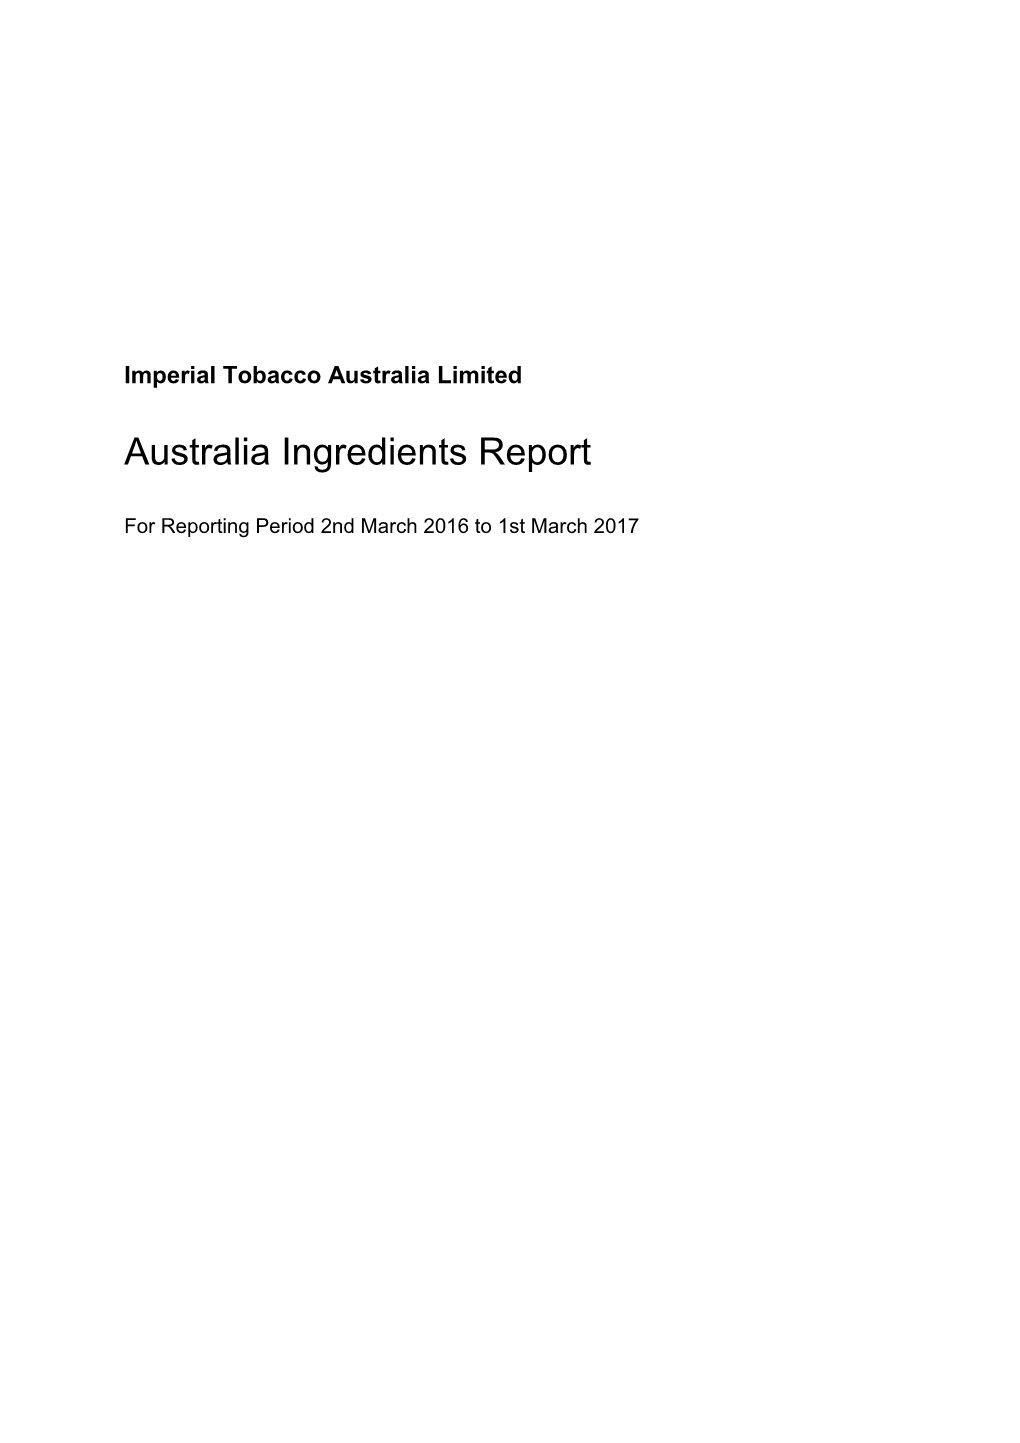 Australia Ingredients Report